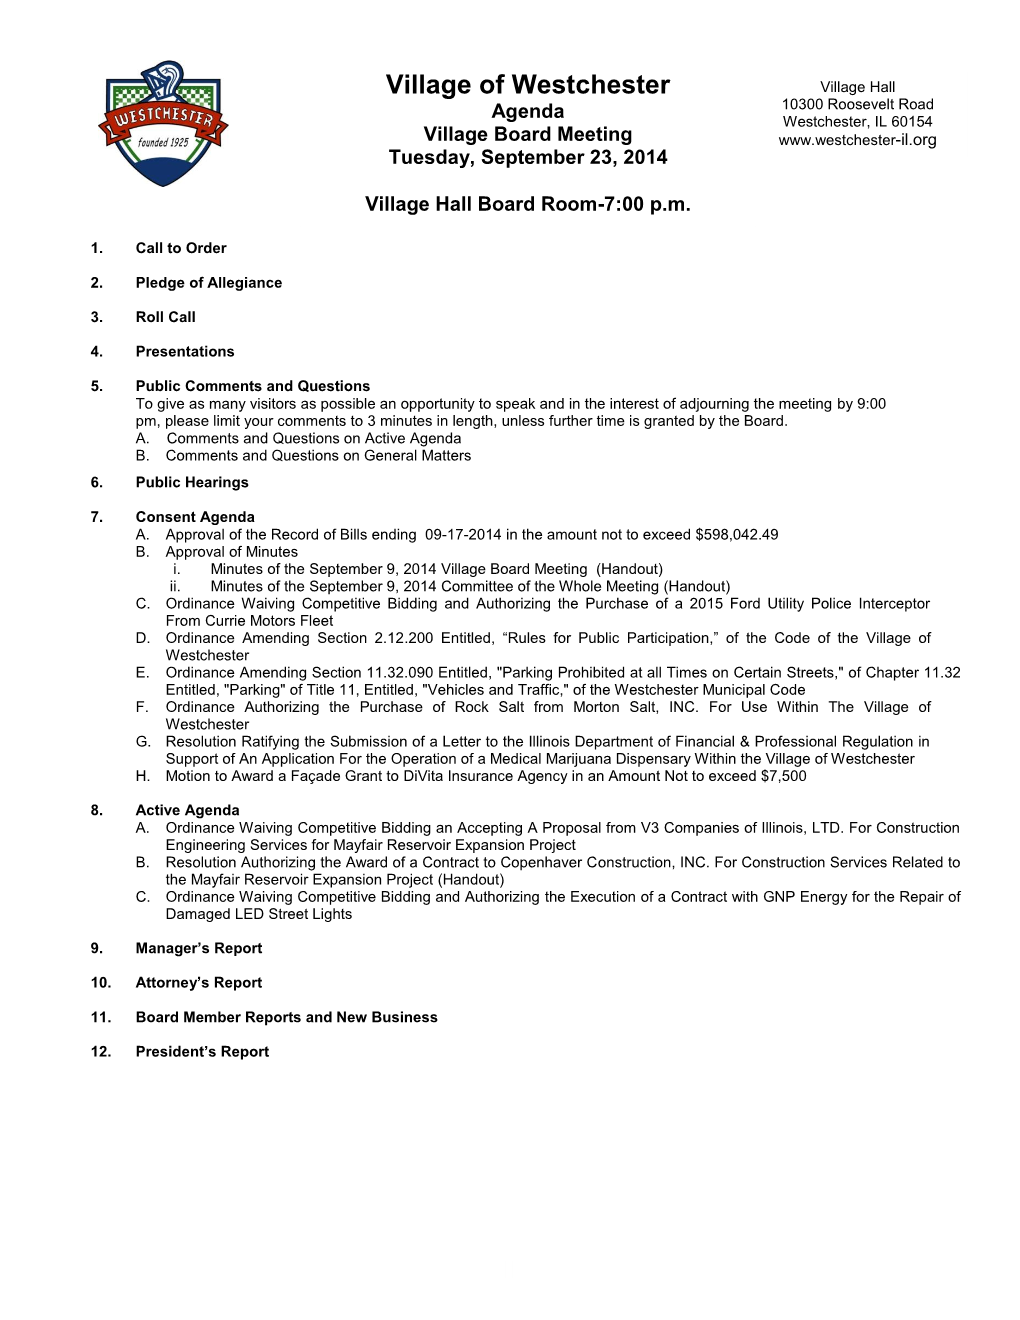 Village of Westchester Village Hall Agenda 10300 Roosevelt Road Westchester, IL 60154 Village Board Meeting Tuesday, September 23, 2014